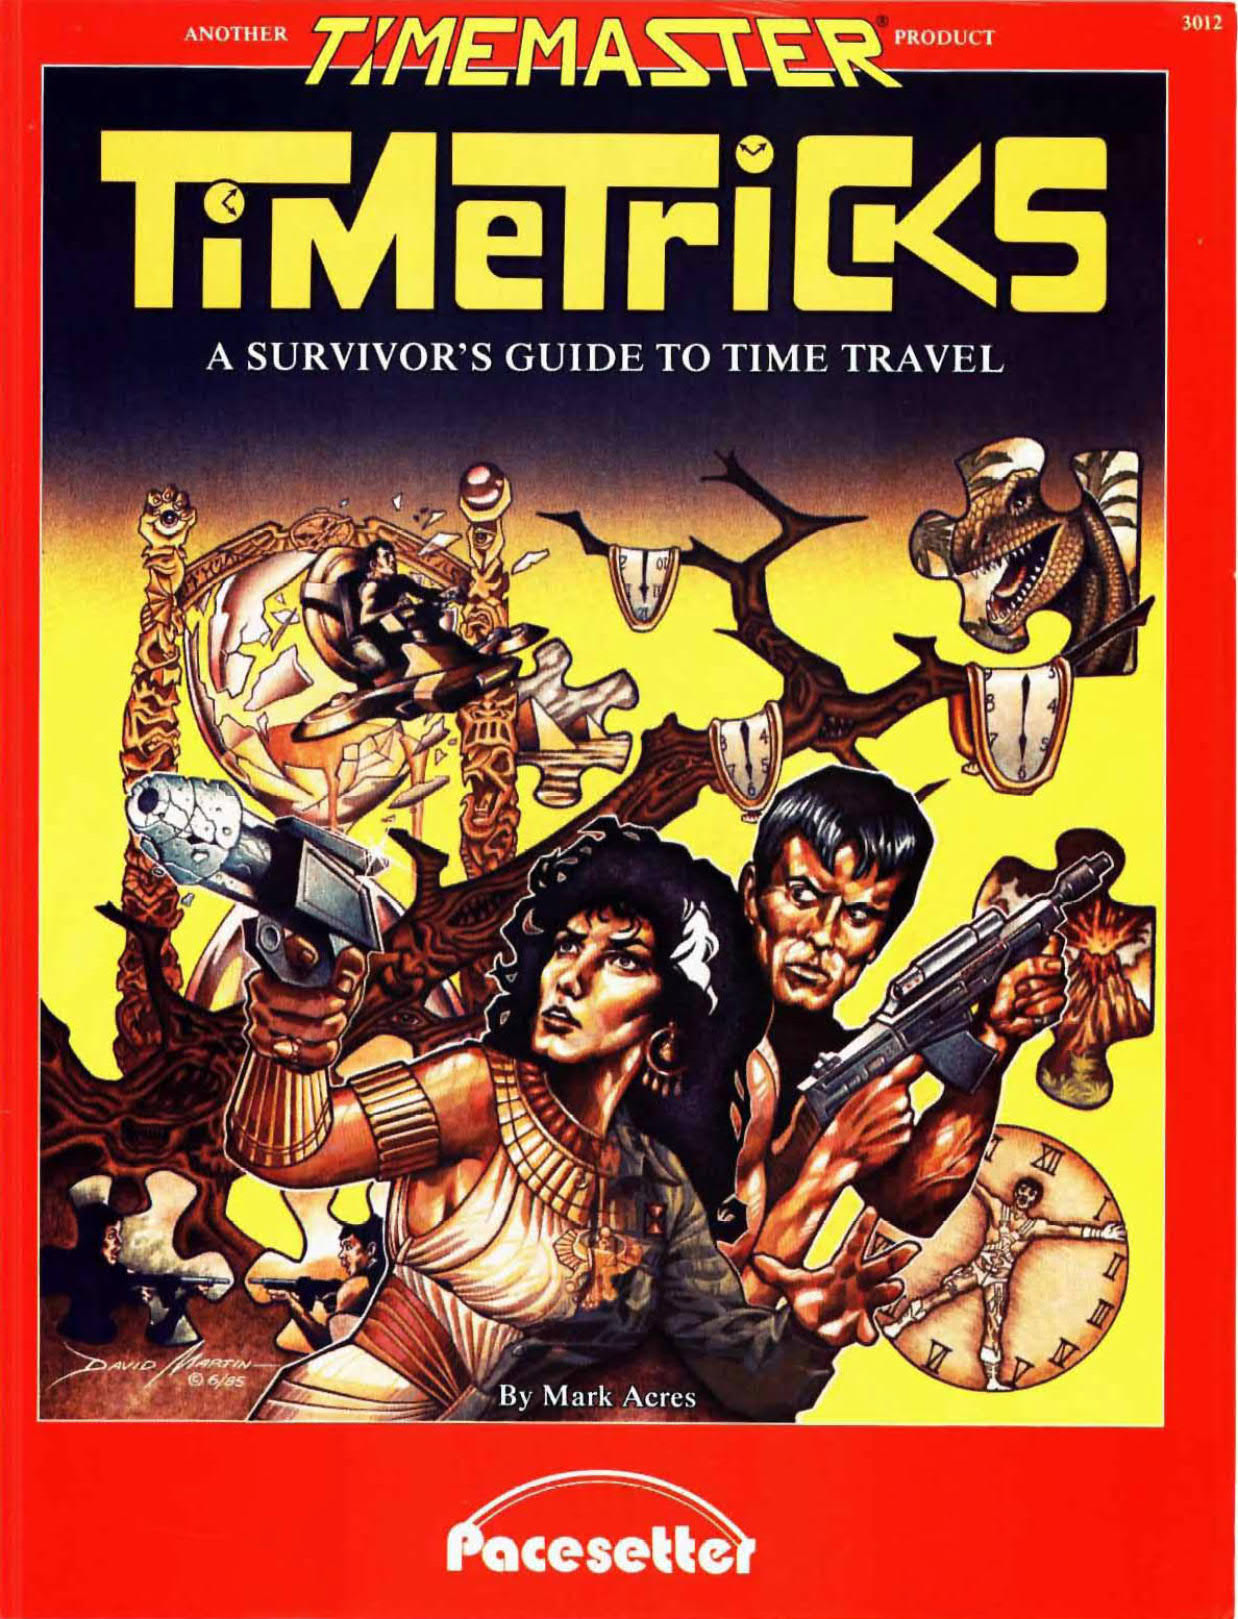 Timemaster - pac3012 - Timetricks - A Survivor's Guide to Time Travel 1.jpg